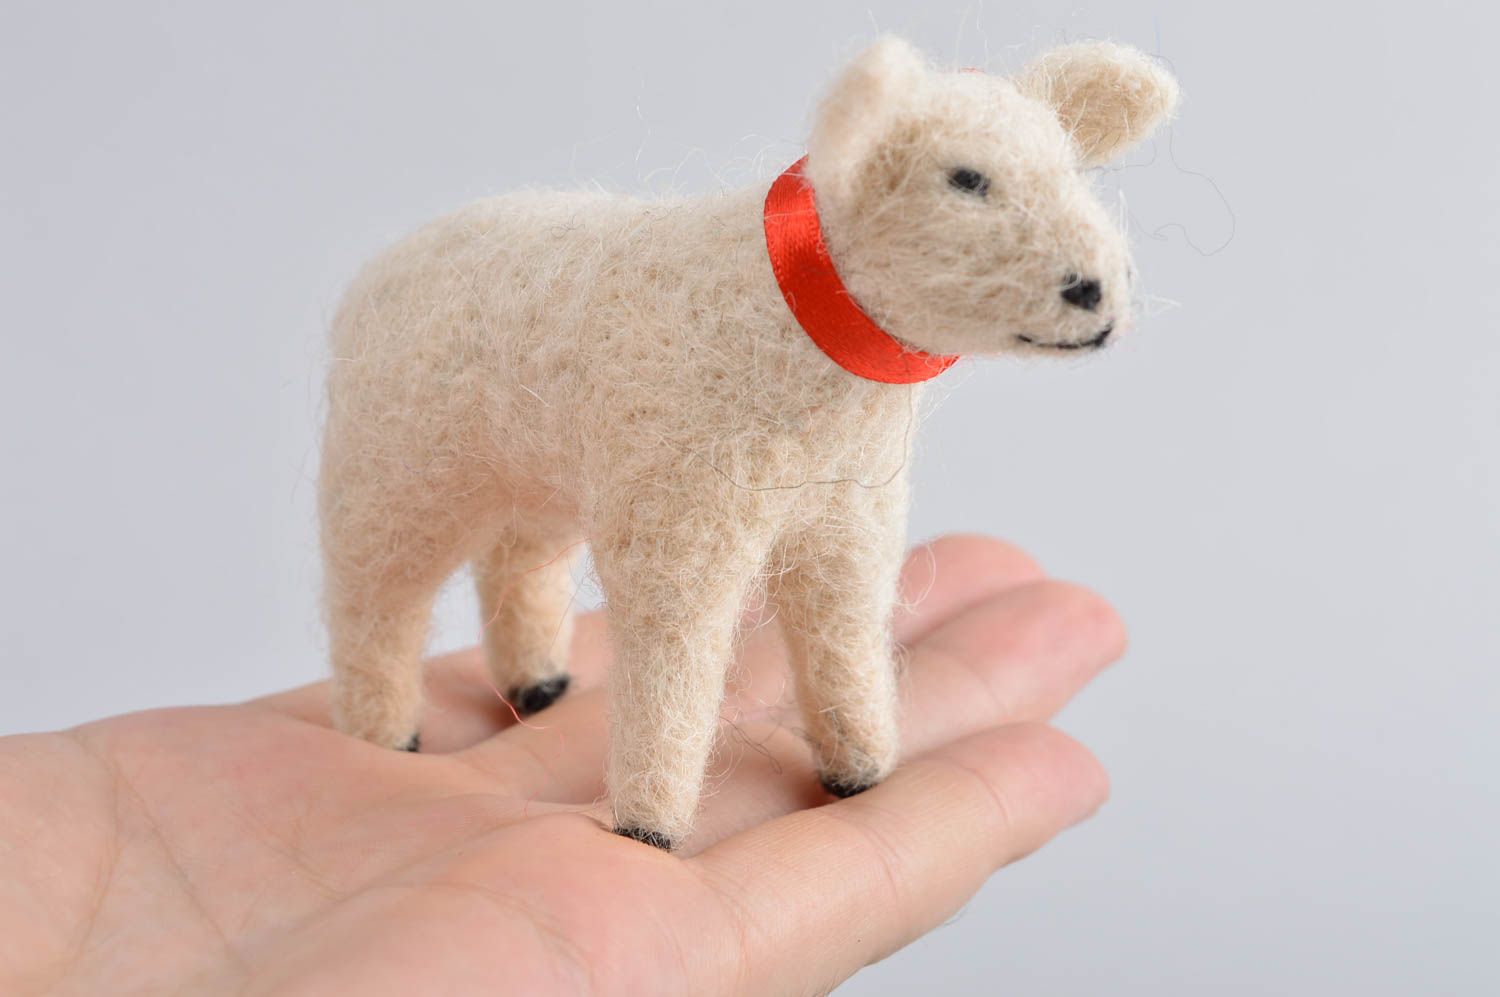 Handmade toy woolen toy for children interior decor ideas gift for baby photo 5